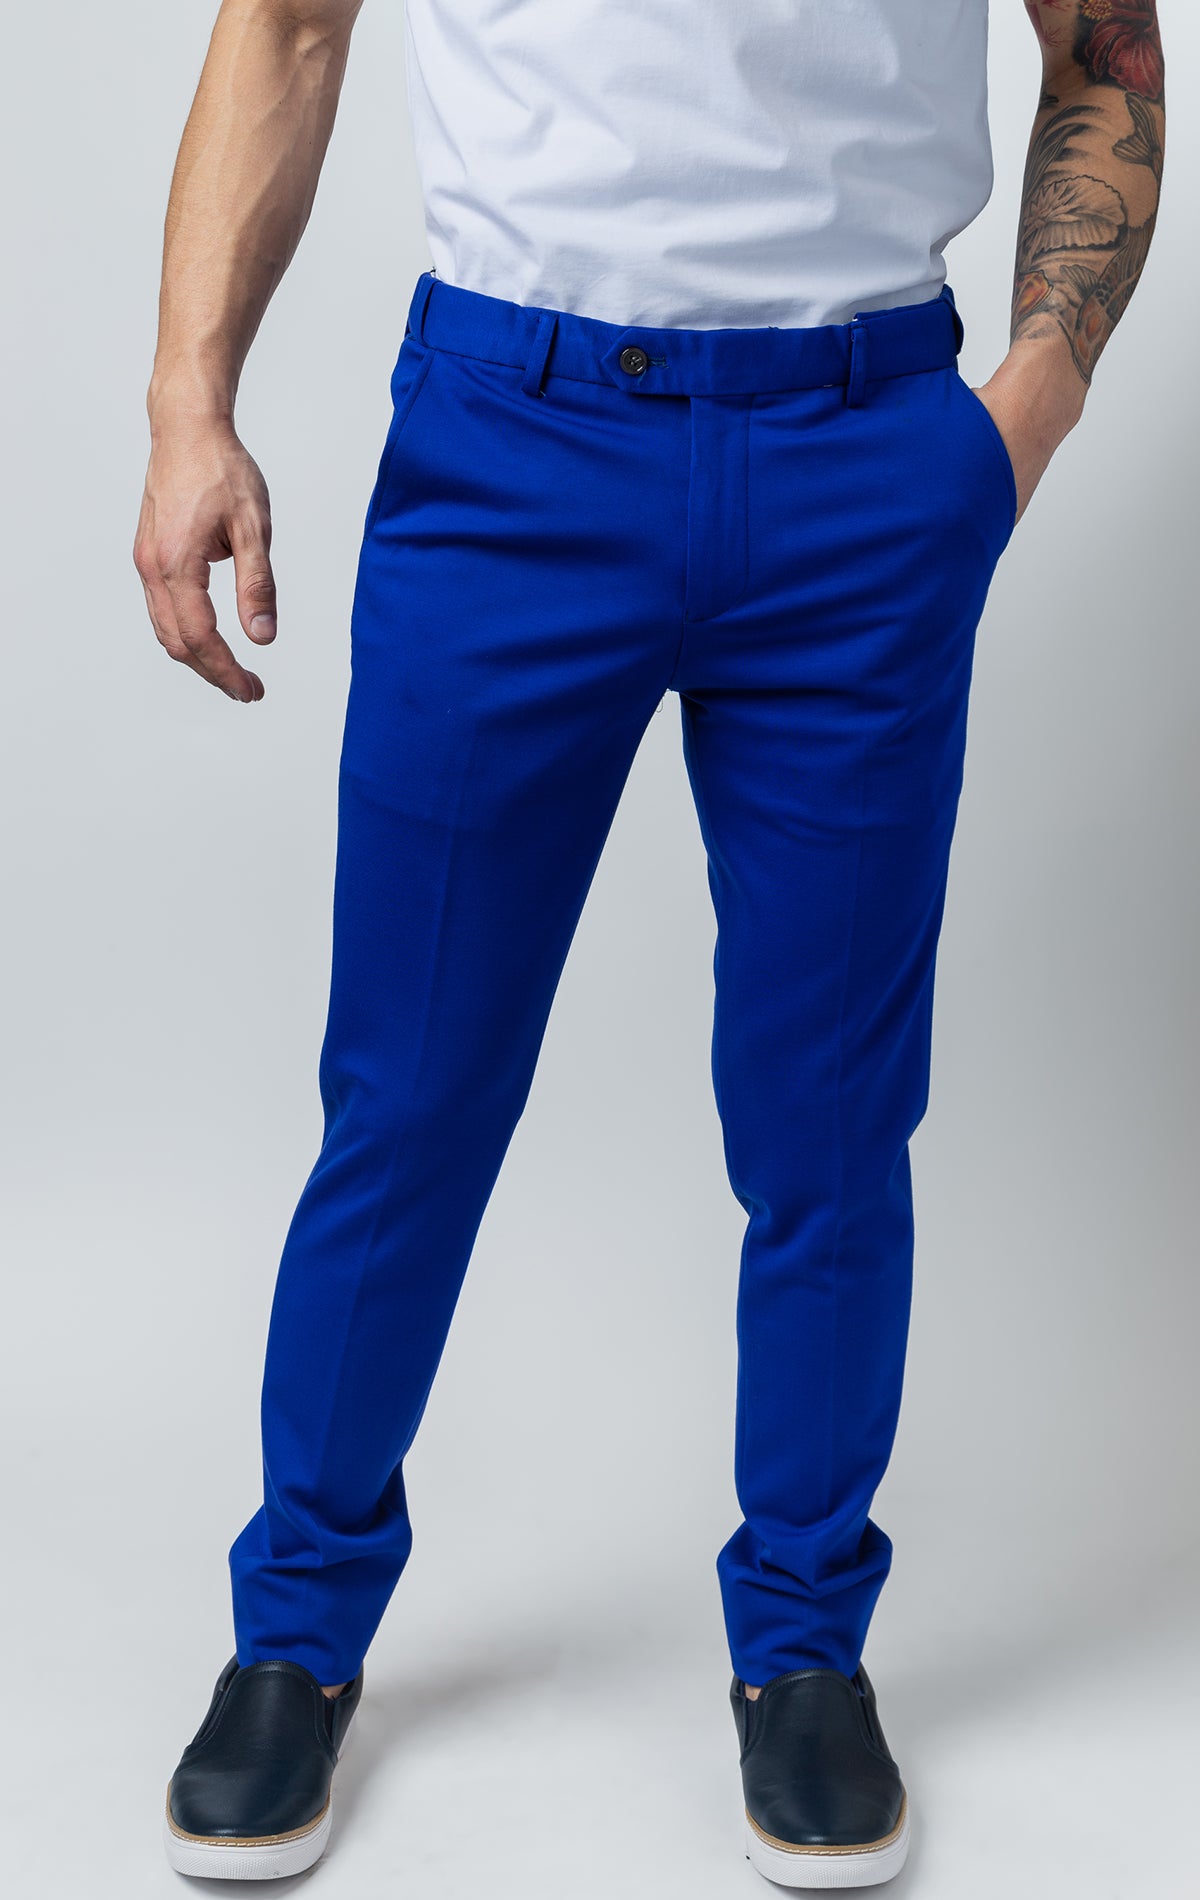 Blue casual/formal pants for men